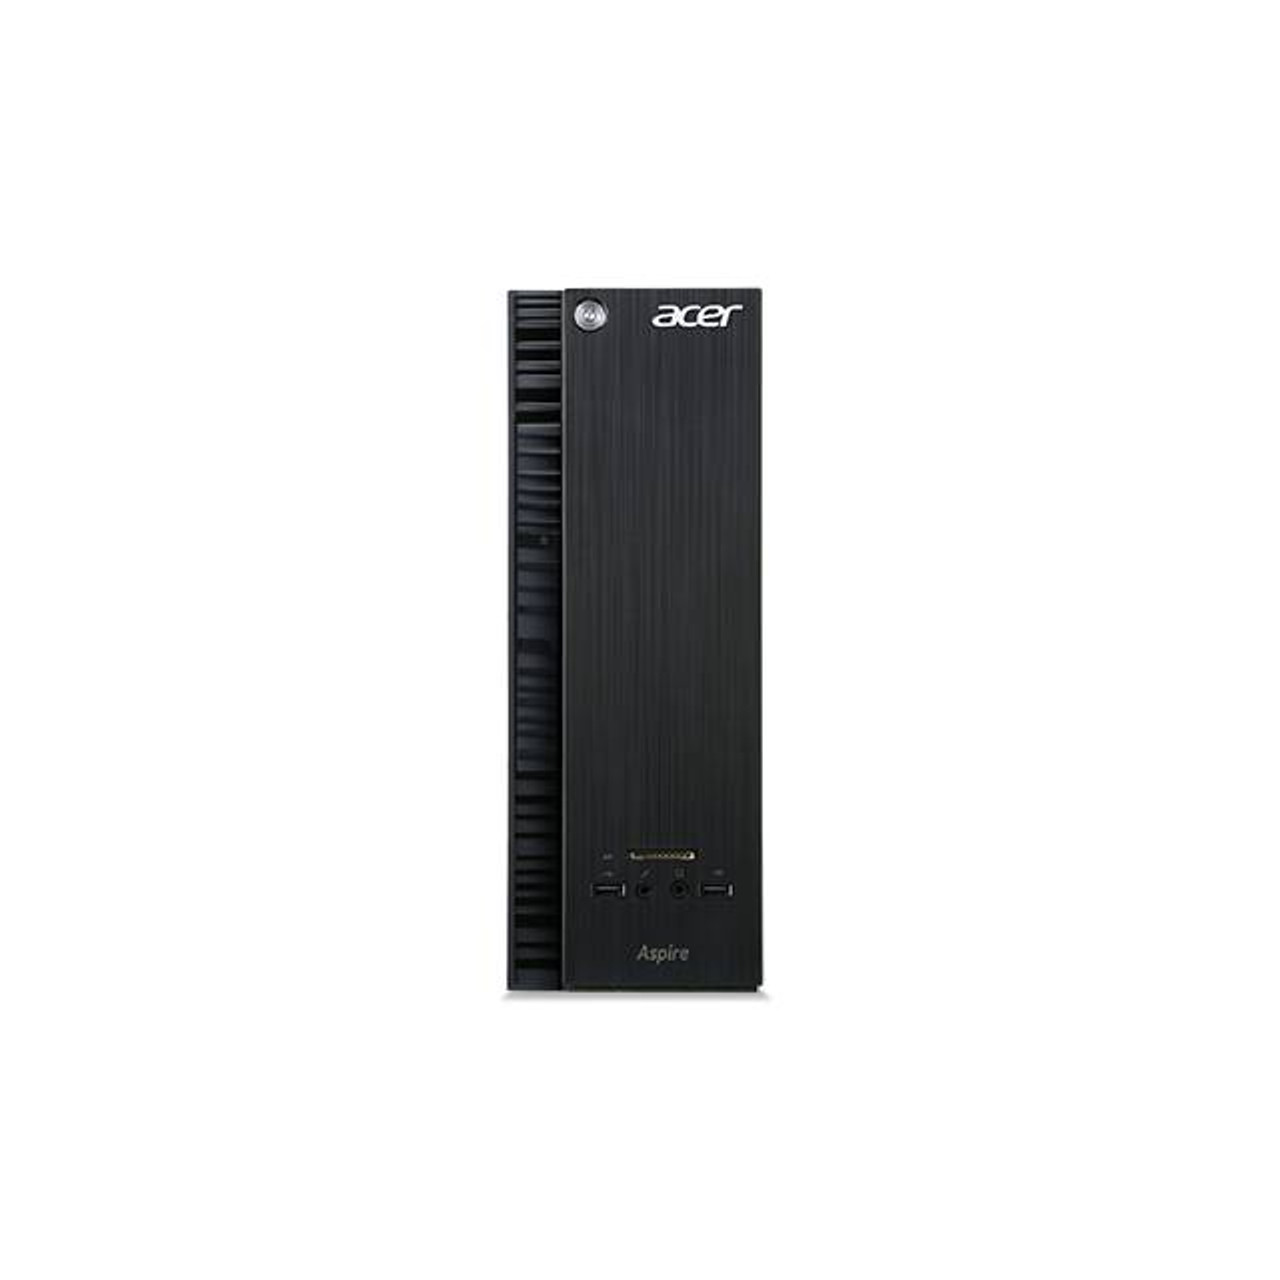 Acer Aspire XC AXC-703-UR52 Intel Pentium J2900 2.41GHz/ 4GB DDR3/ 1TB HDD/ DVD±RW/ Windows 10 Home Desktop PC (Black)